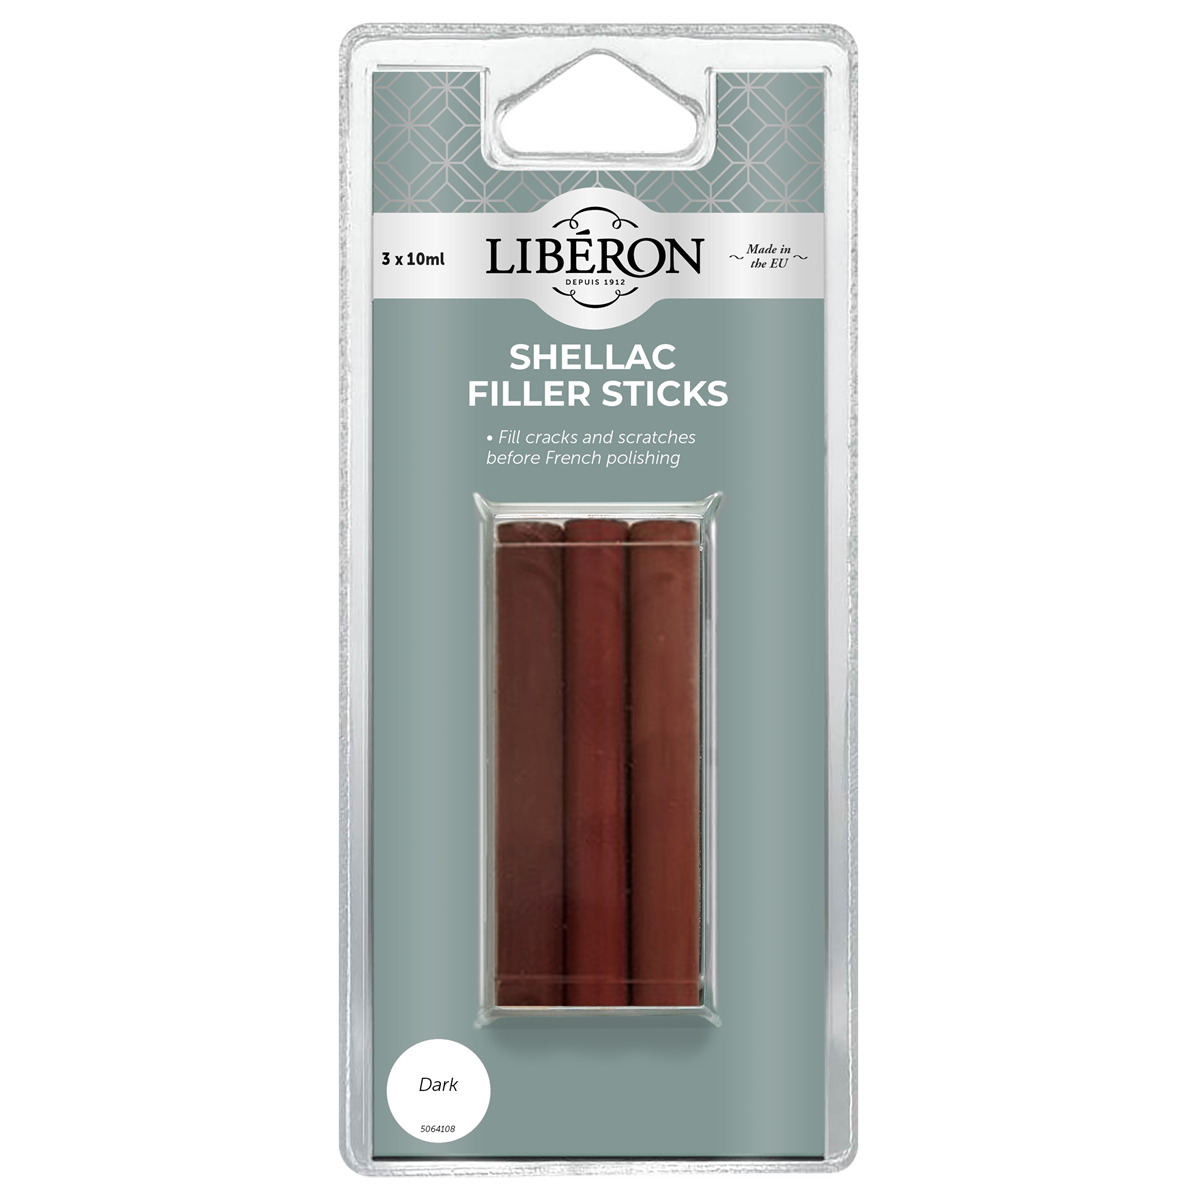 Liberon Shellac Filler Sticks Dark Pack of 3